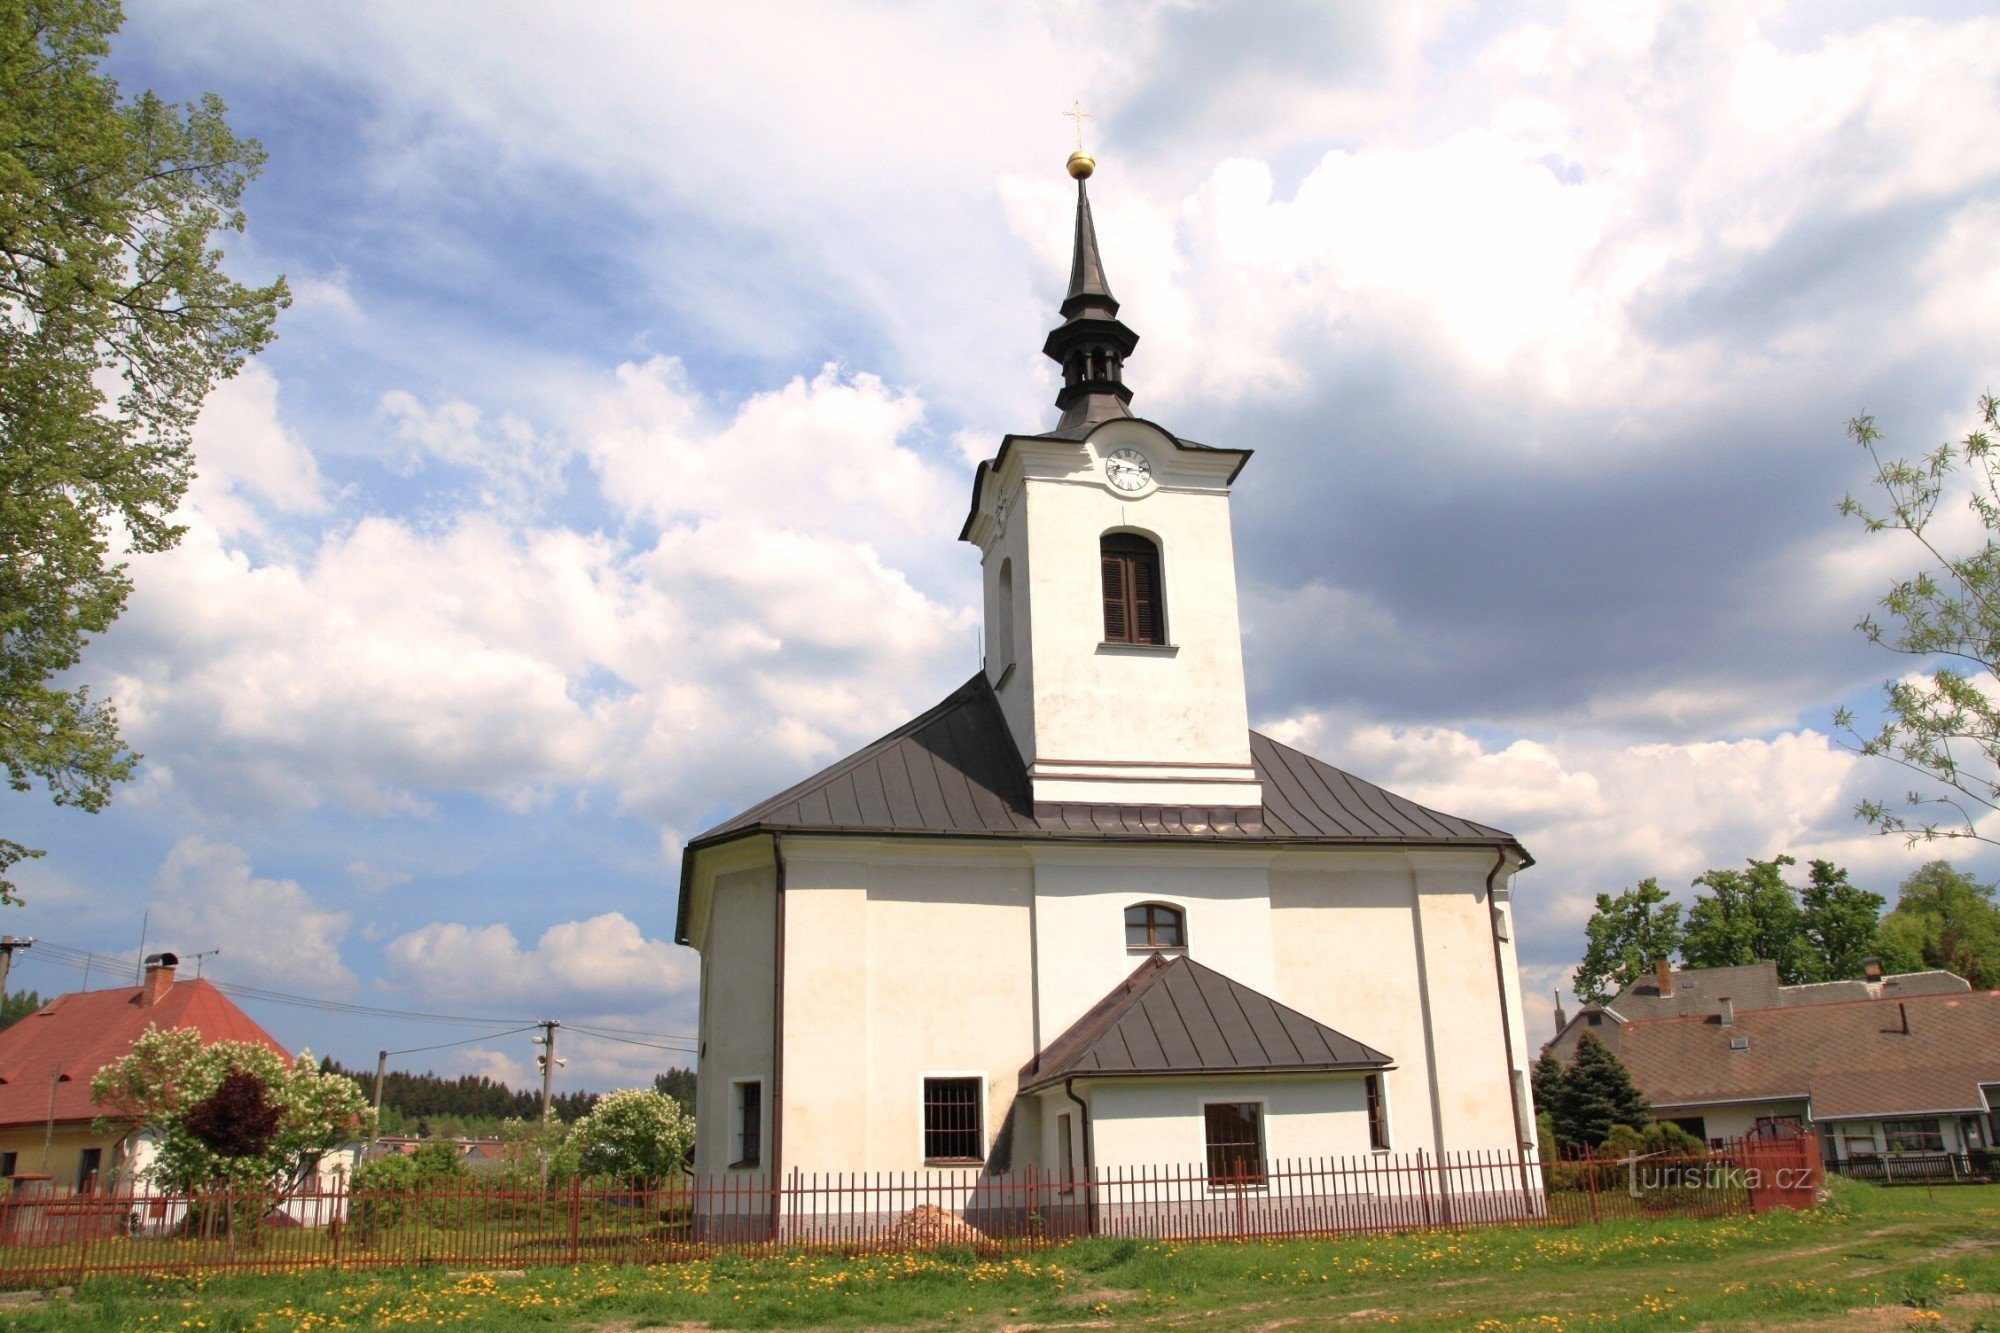 Vojnův Městec - Church of St. Andrew